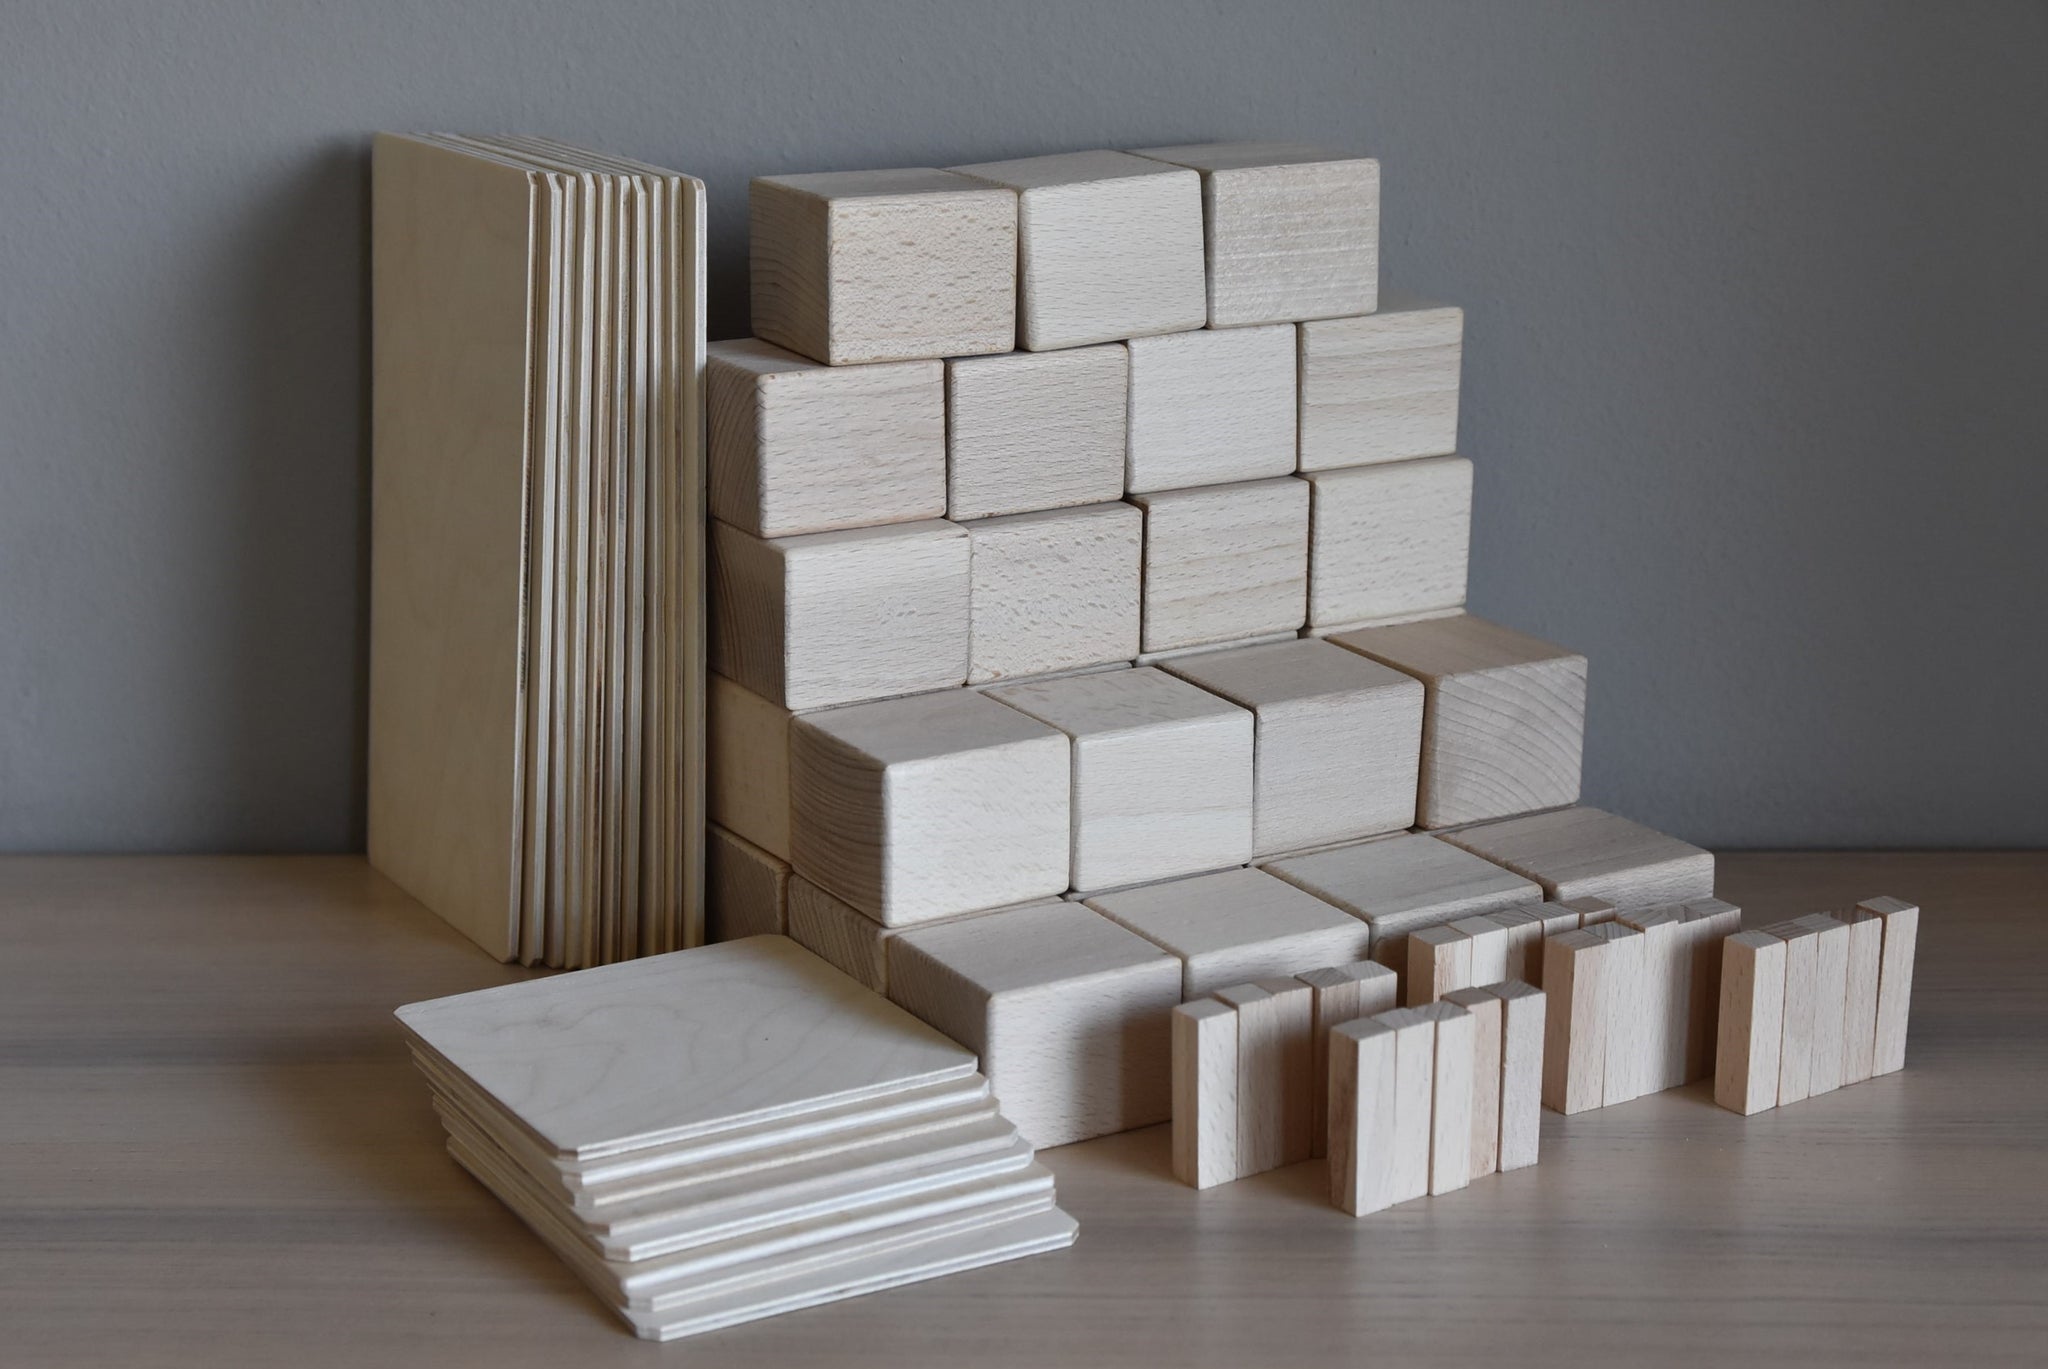 Just Blocks: Wood Block Puzzle by NewPubCo, Inc